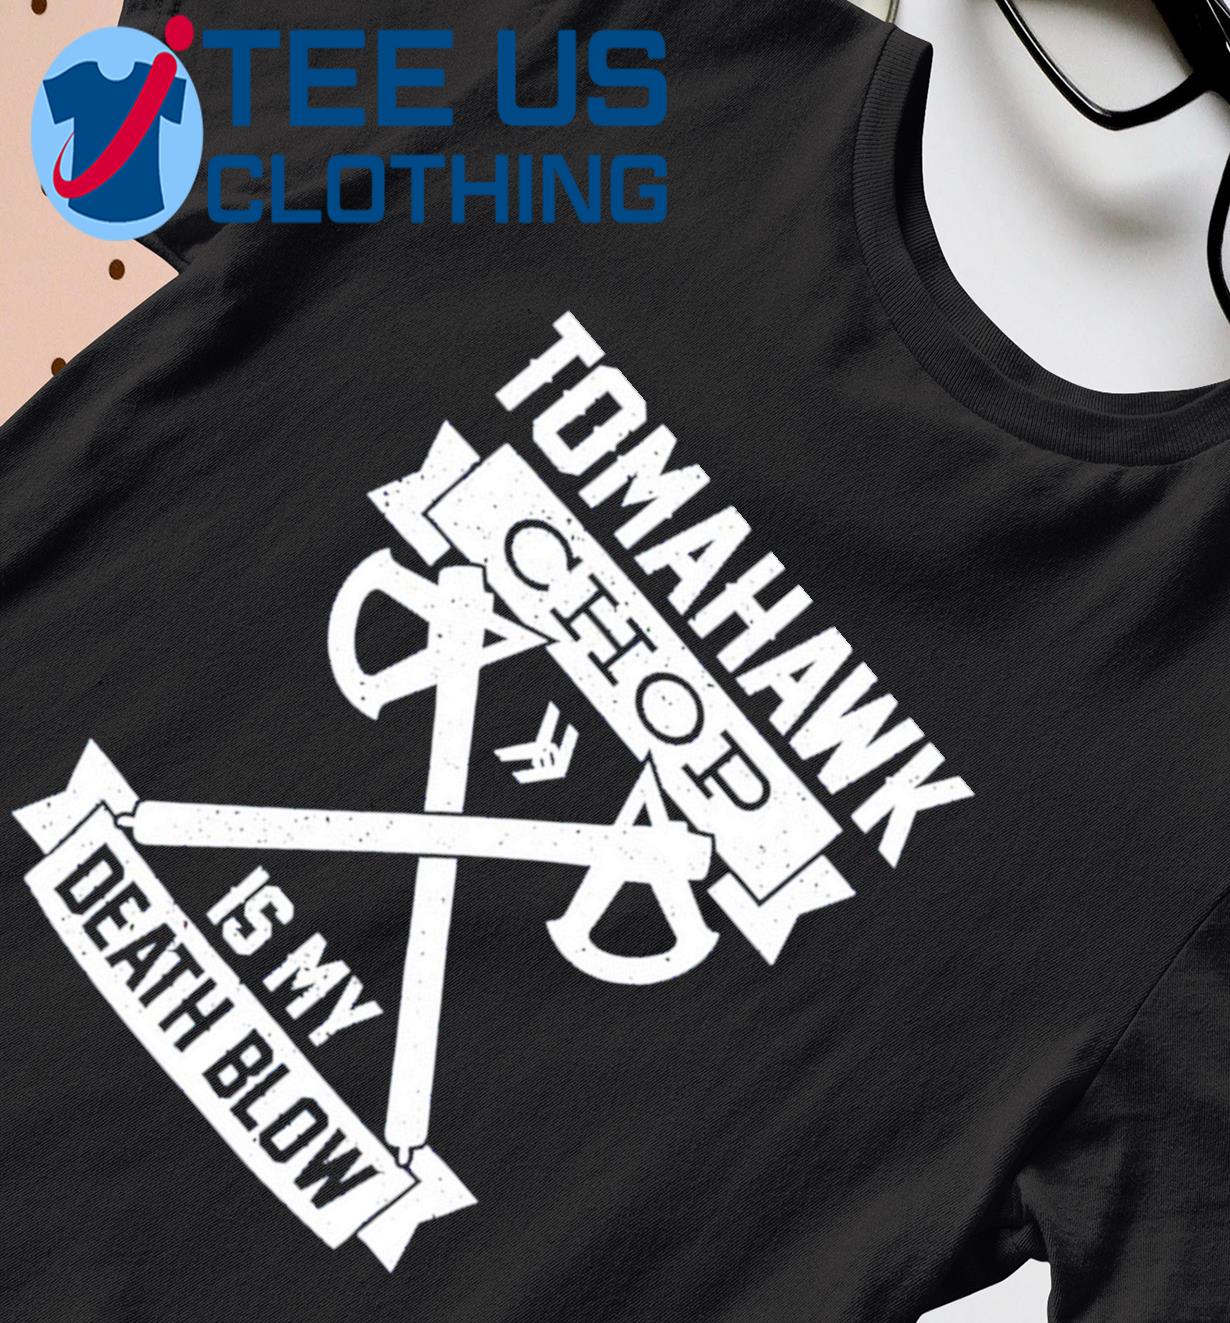 Tomahawk Chop 100M Shirt, hoodie, longsleeve tee, sweater